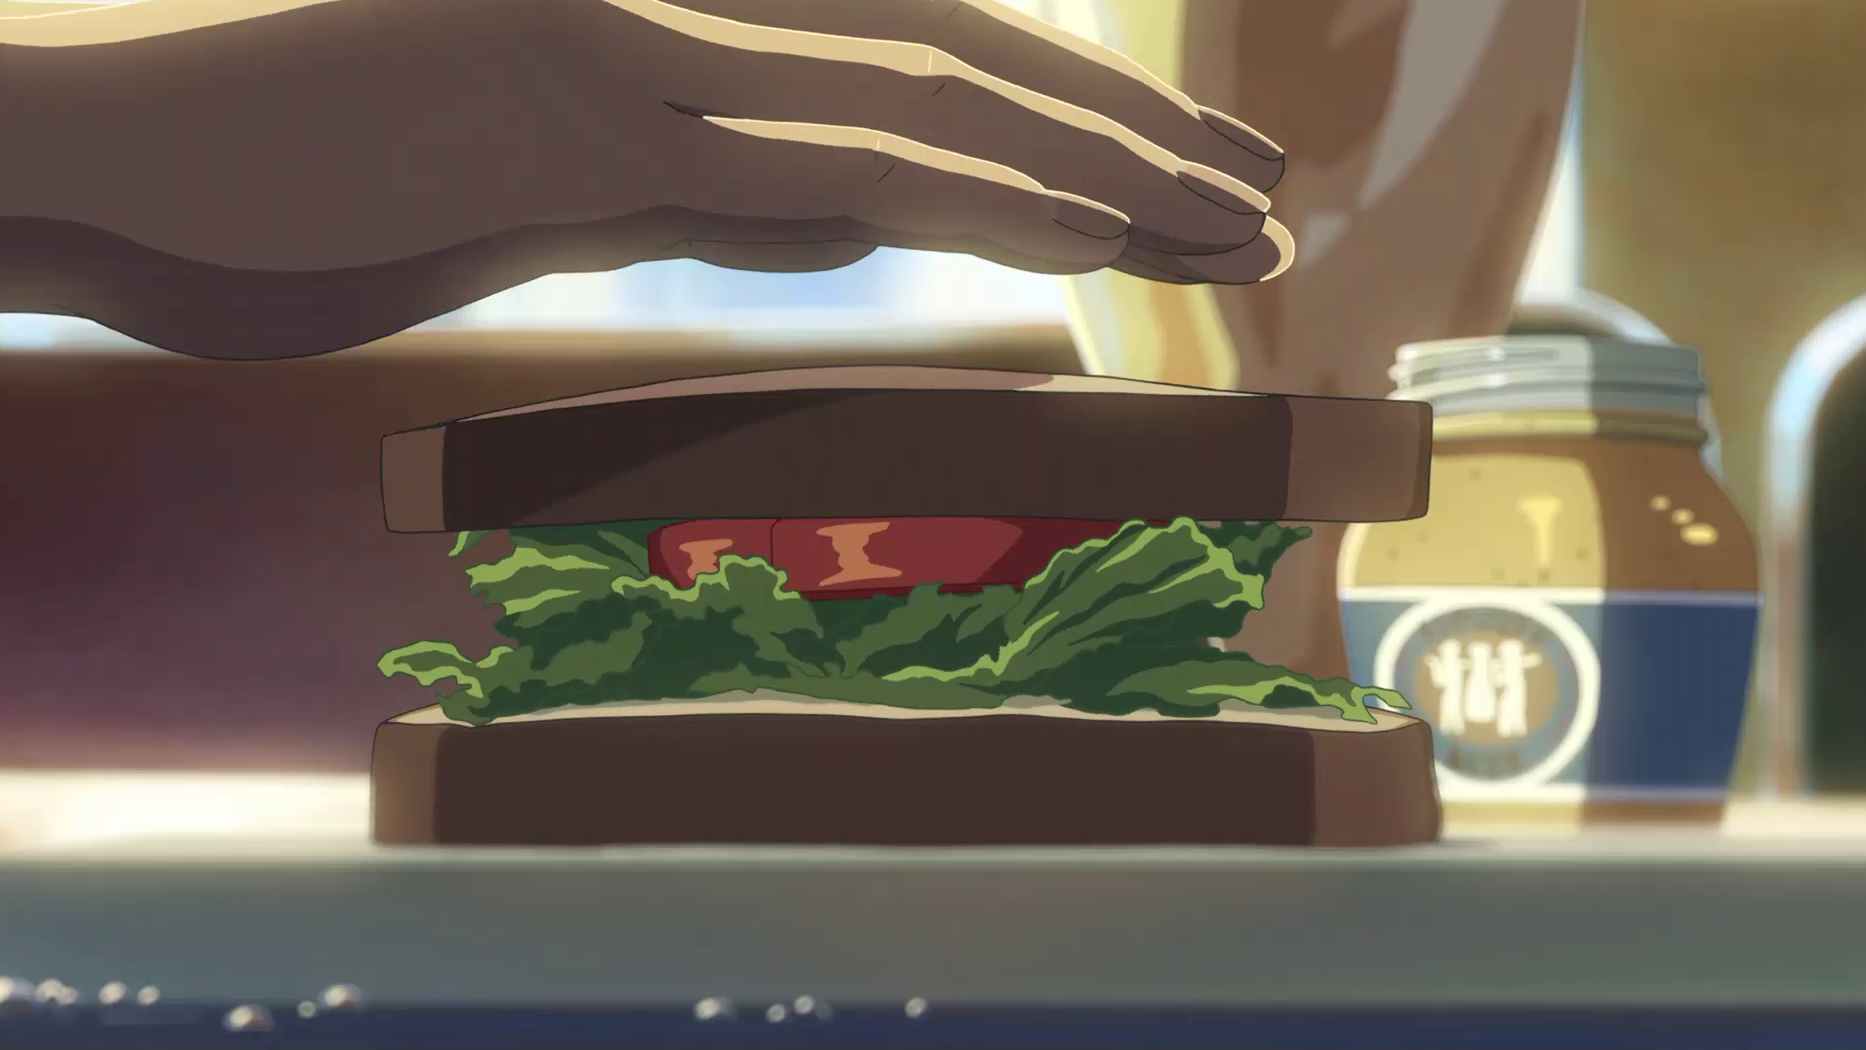 A boy eating a sandwich anime